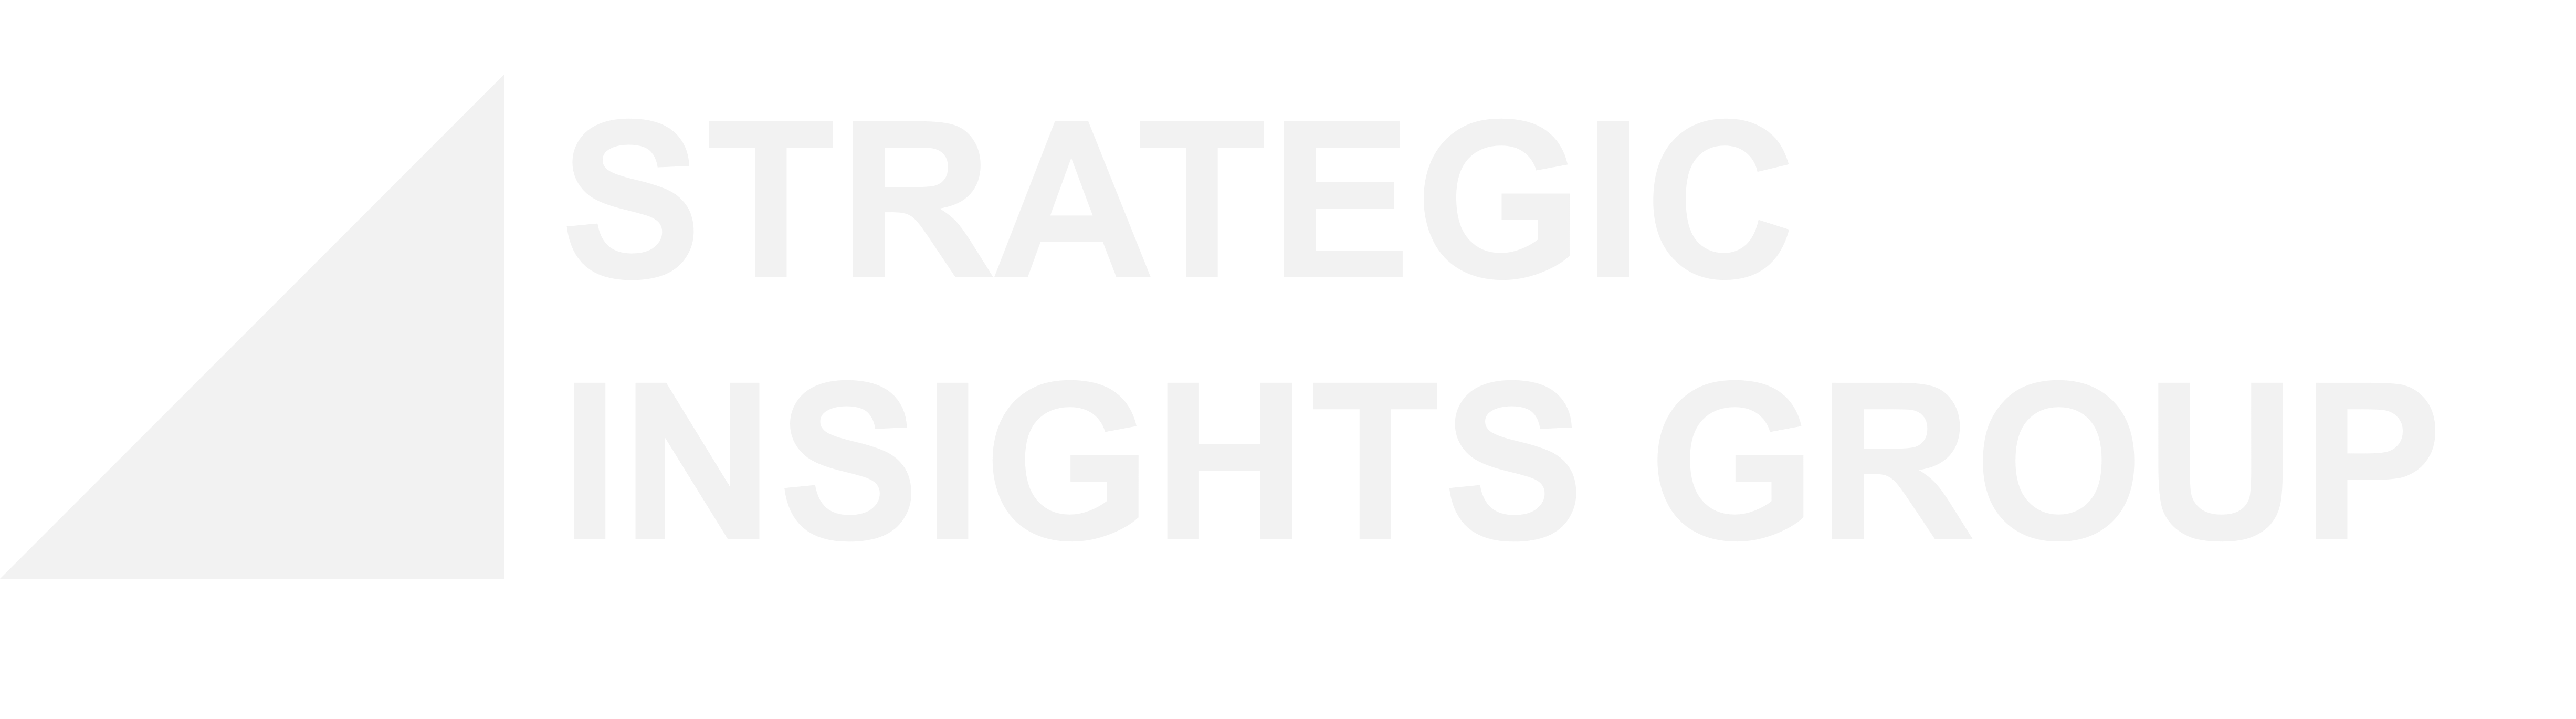 Strategic Insights Group